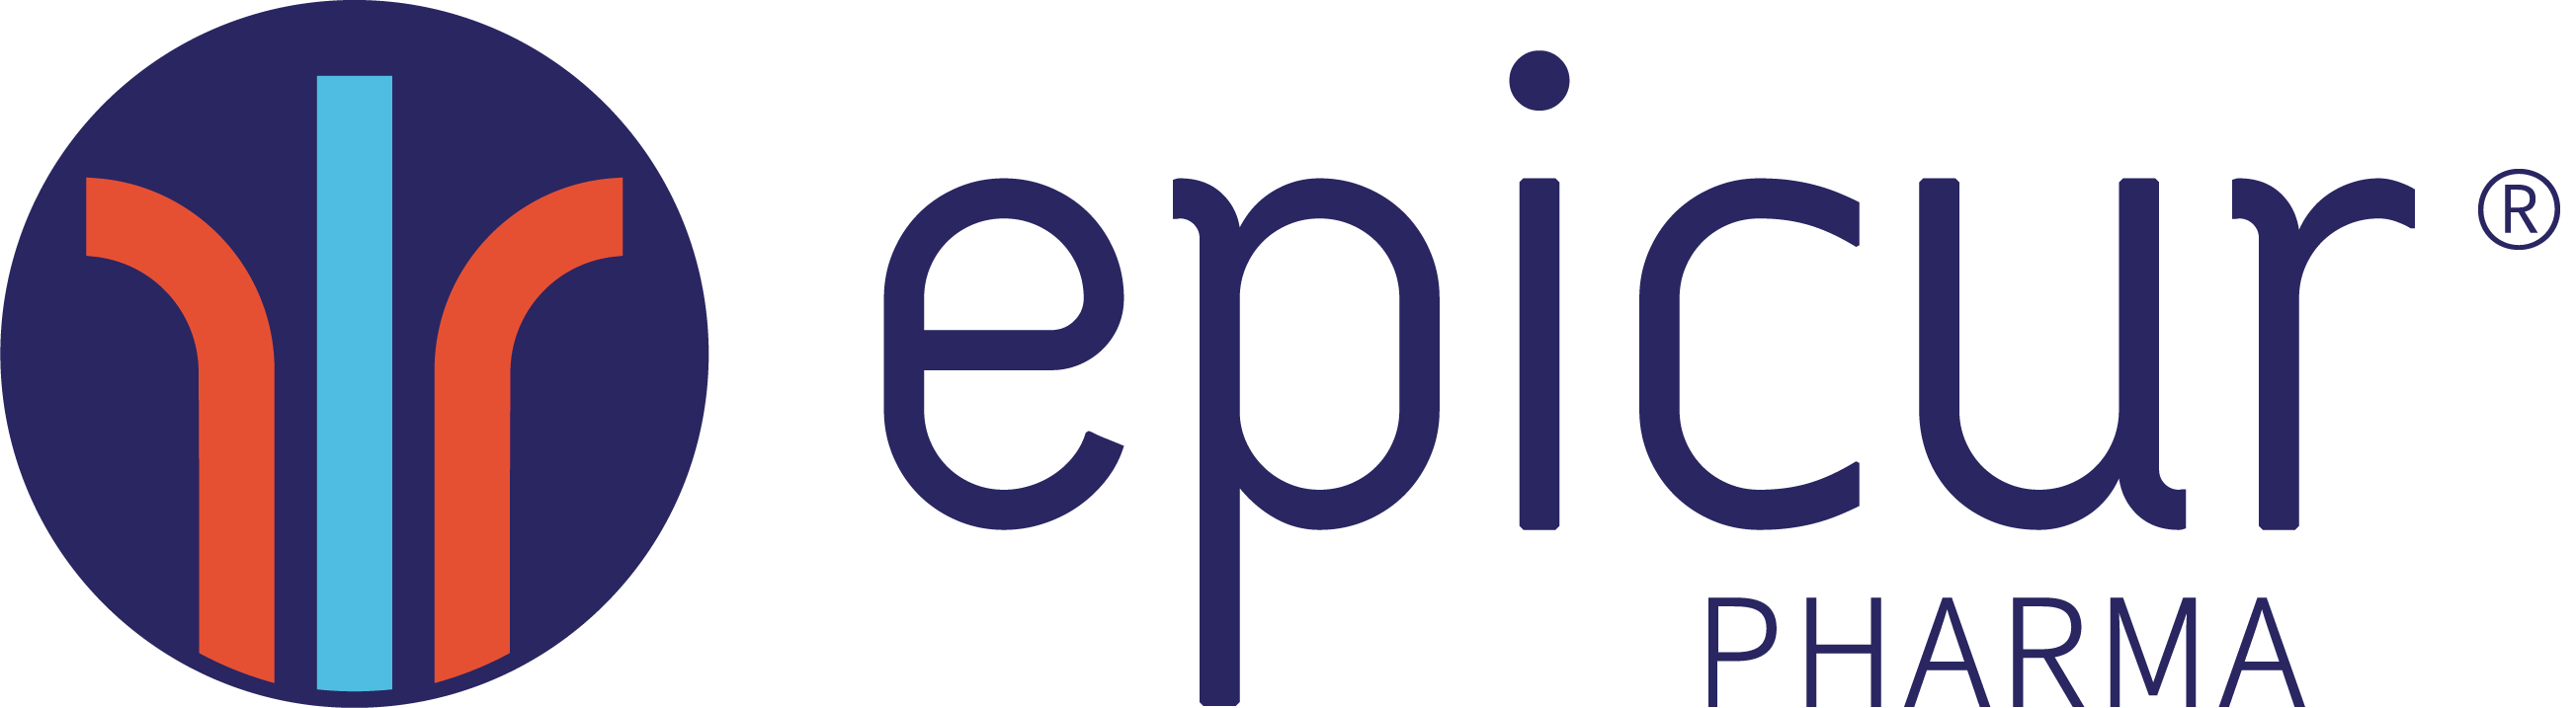 Epicur Pharma